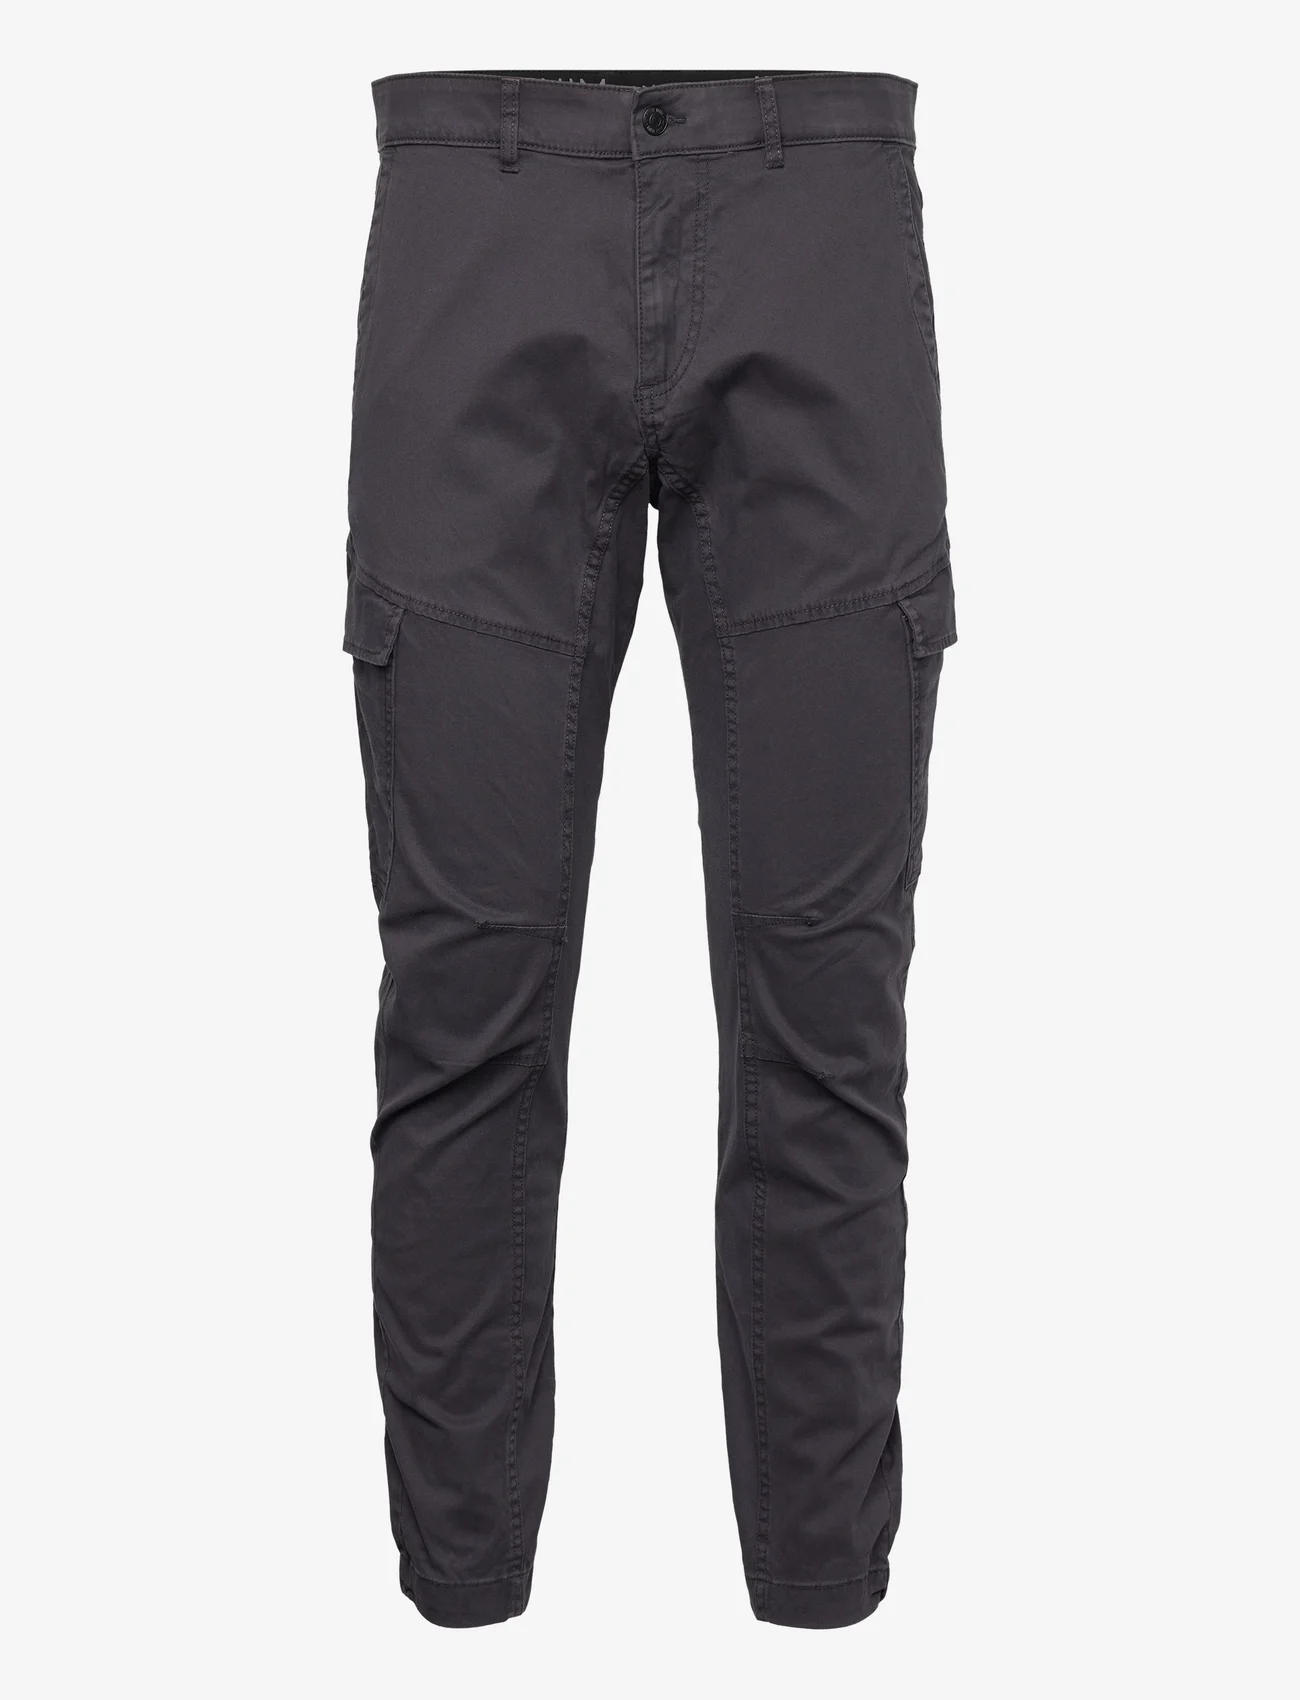 Tom Tailor - slim cargo pants - kargopüksid - coal grey - 0